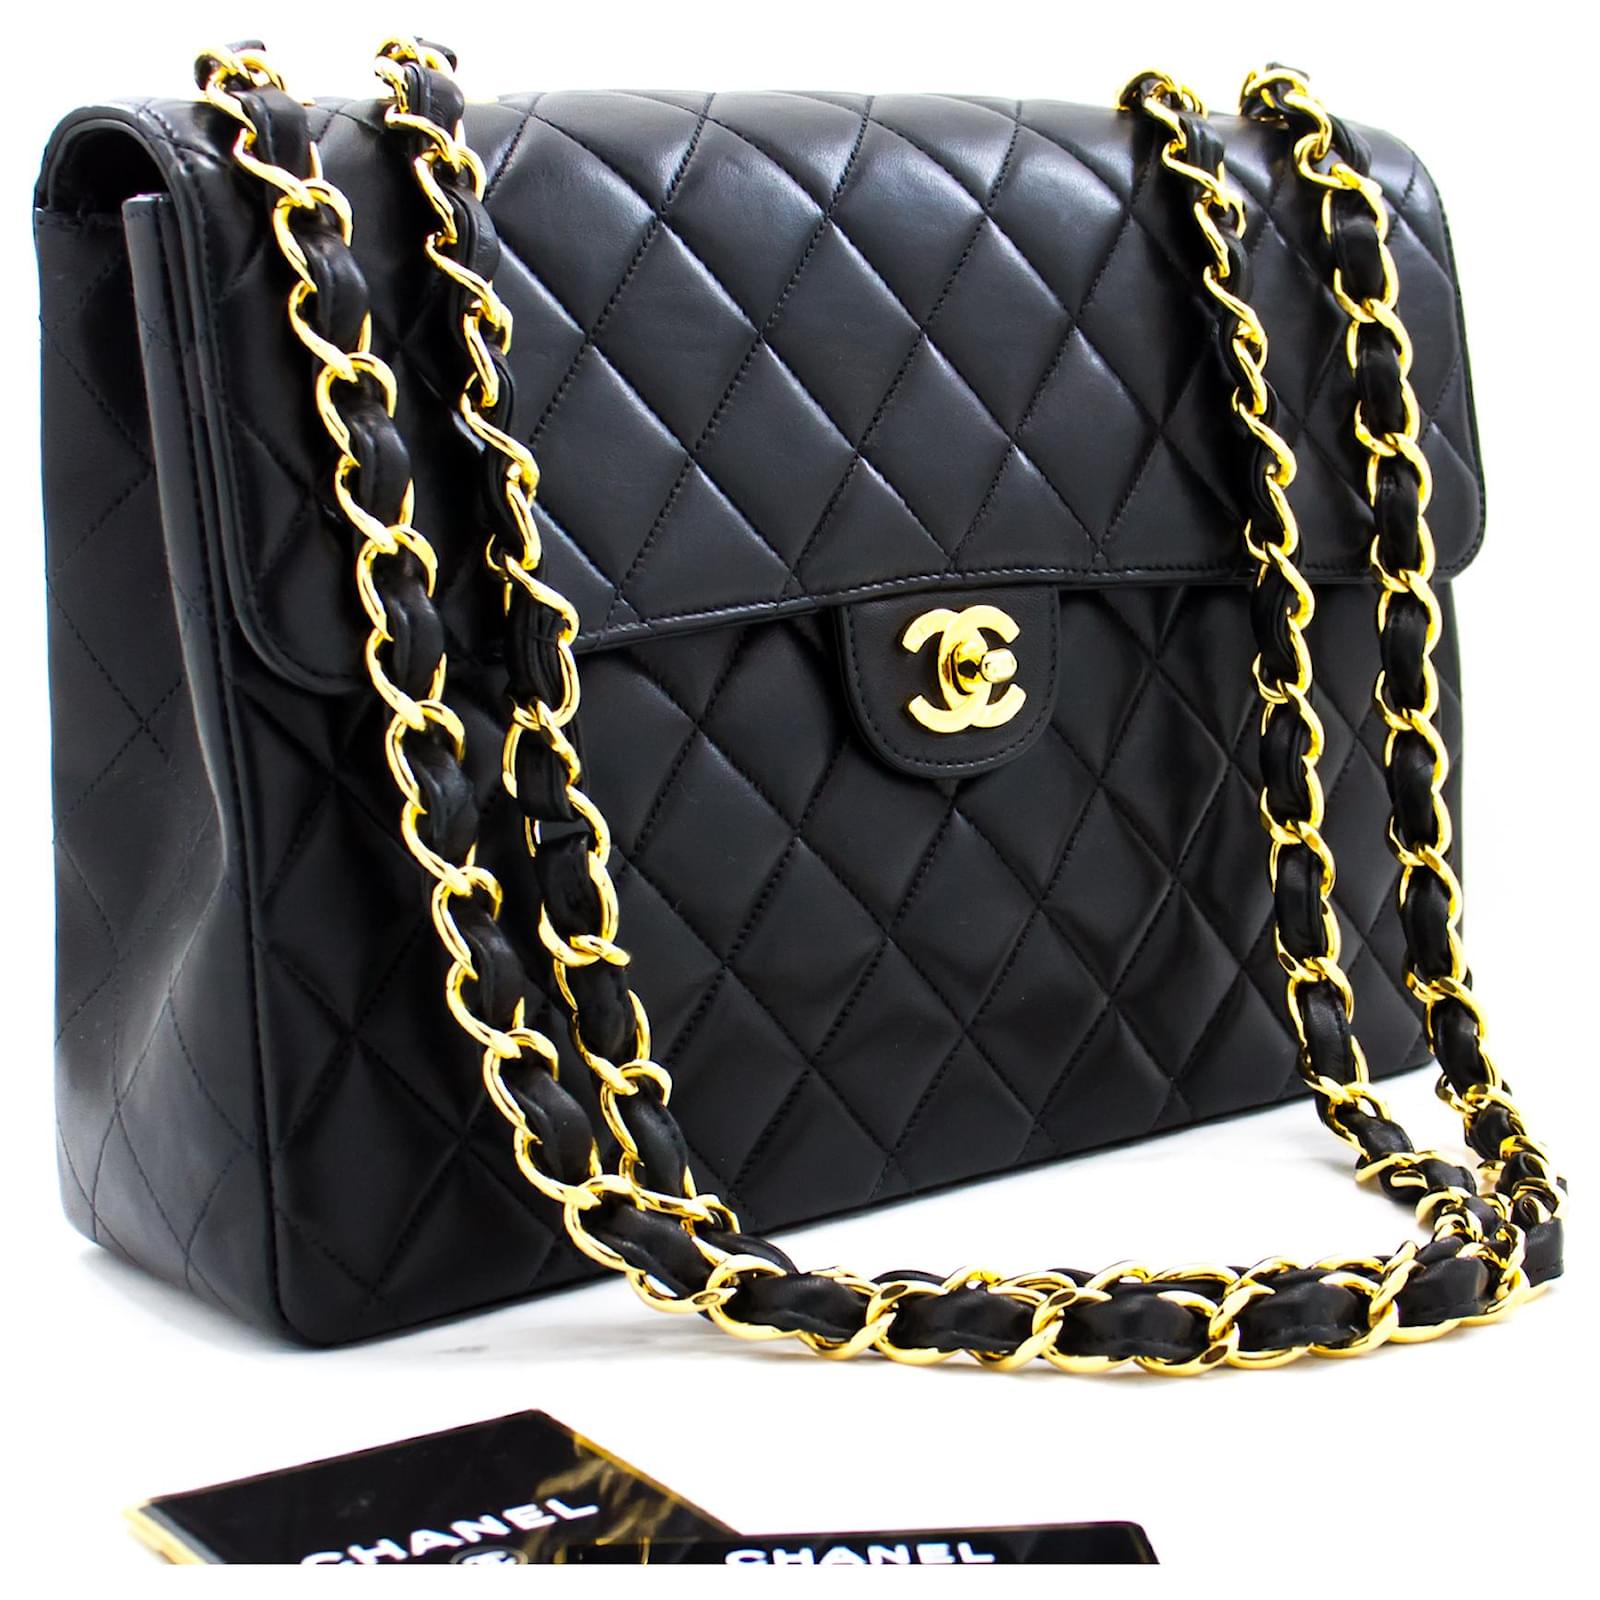 Chanel Classic Jumbo Square Single Flap Bag